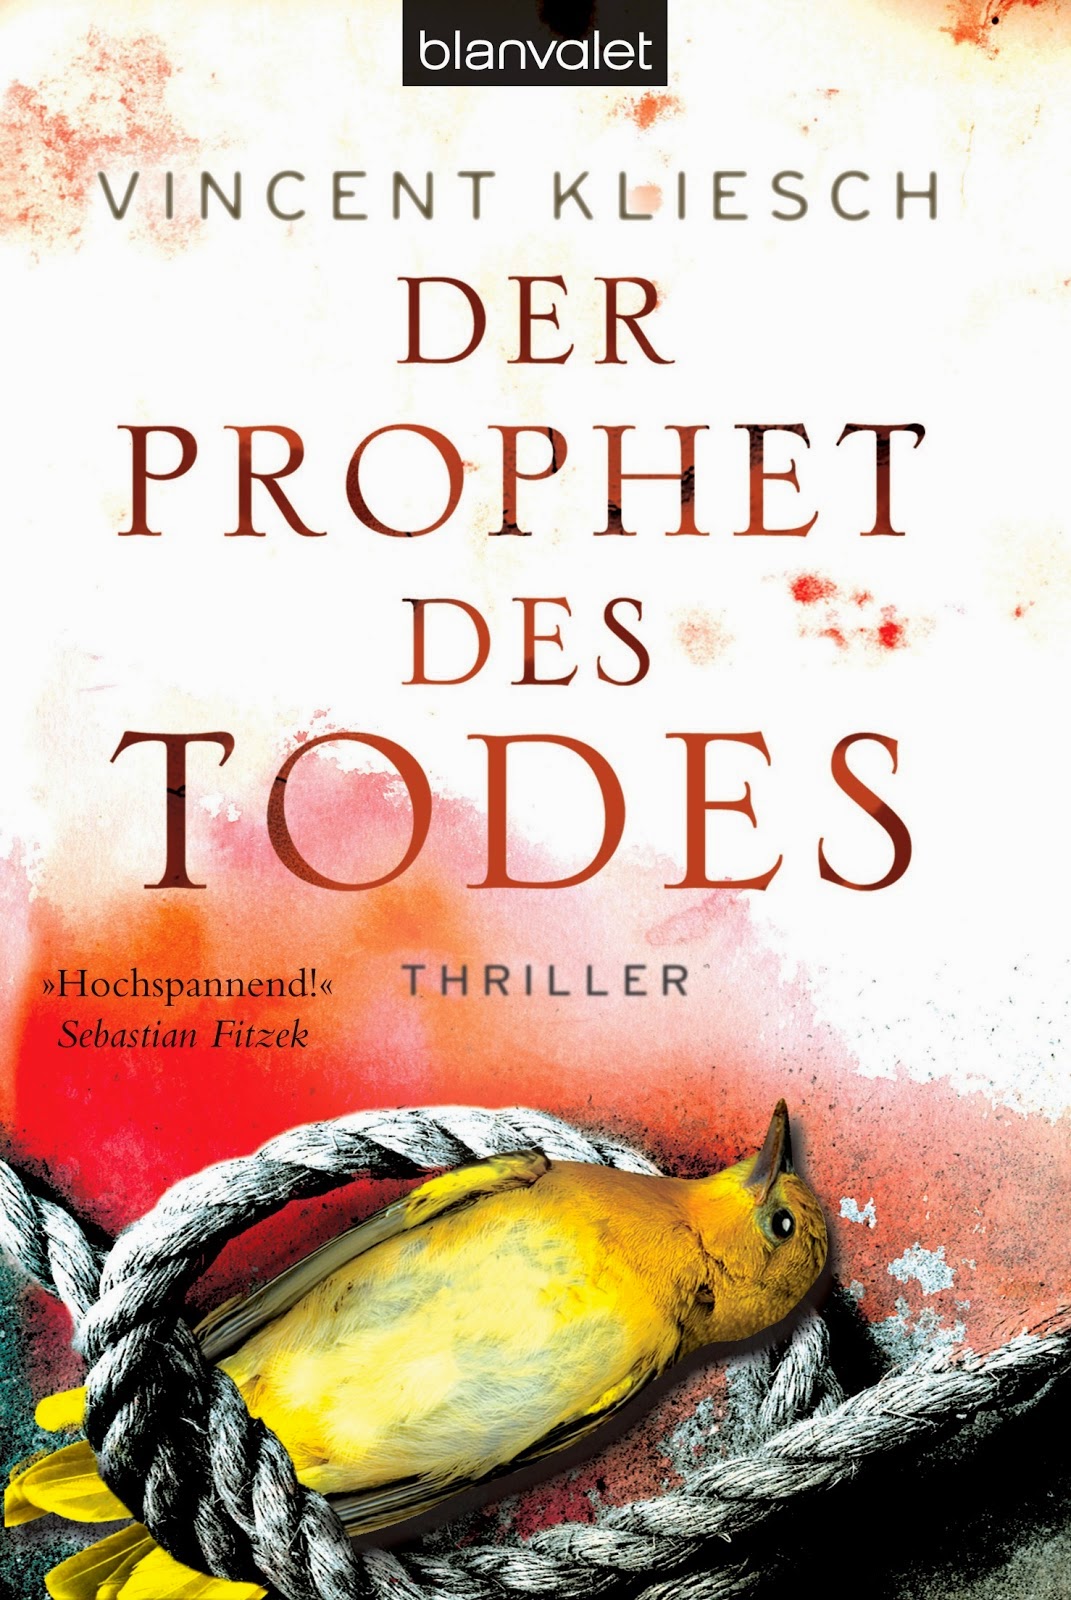 http://www.randomhouse.de/Taschenbuch/Der-Prophet-des-Todes-Thriller/Vincent-Kliesch/e372924.rhd